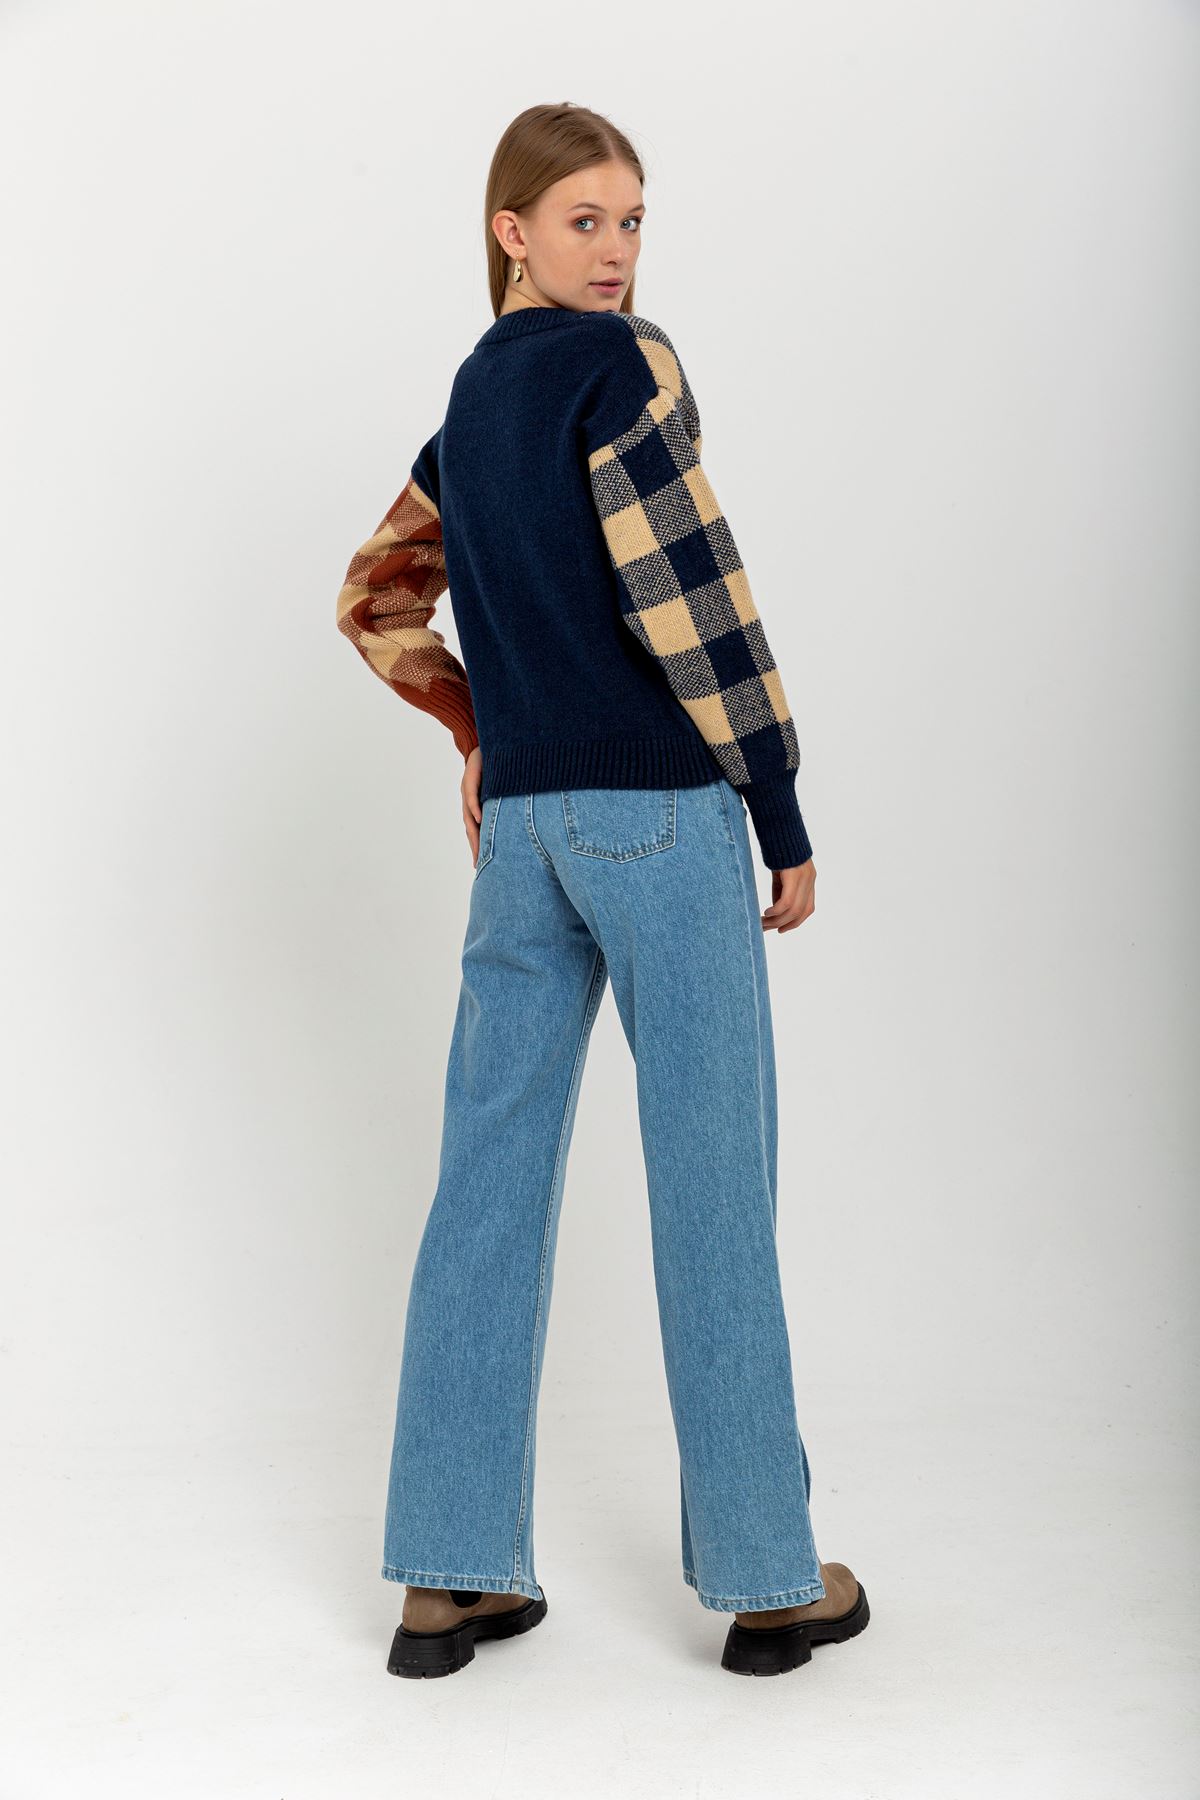 Knitwear Fabric Long Sleeve V-Neck Short Women Cardigan - Brown